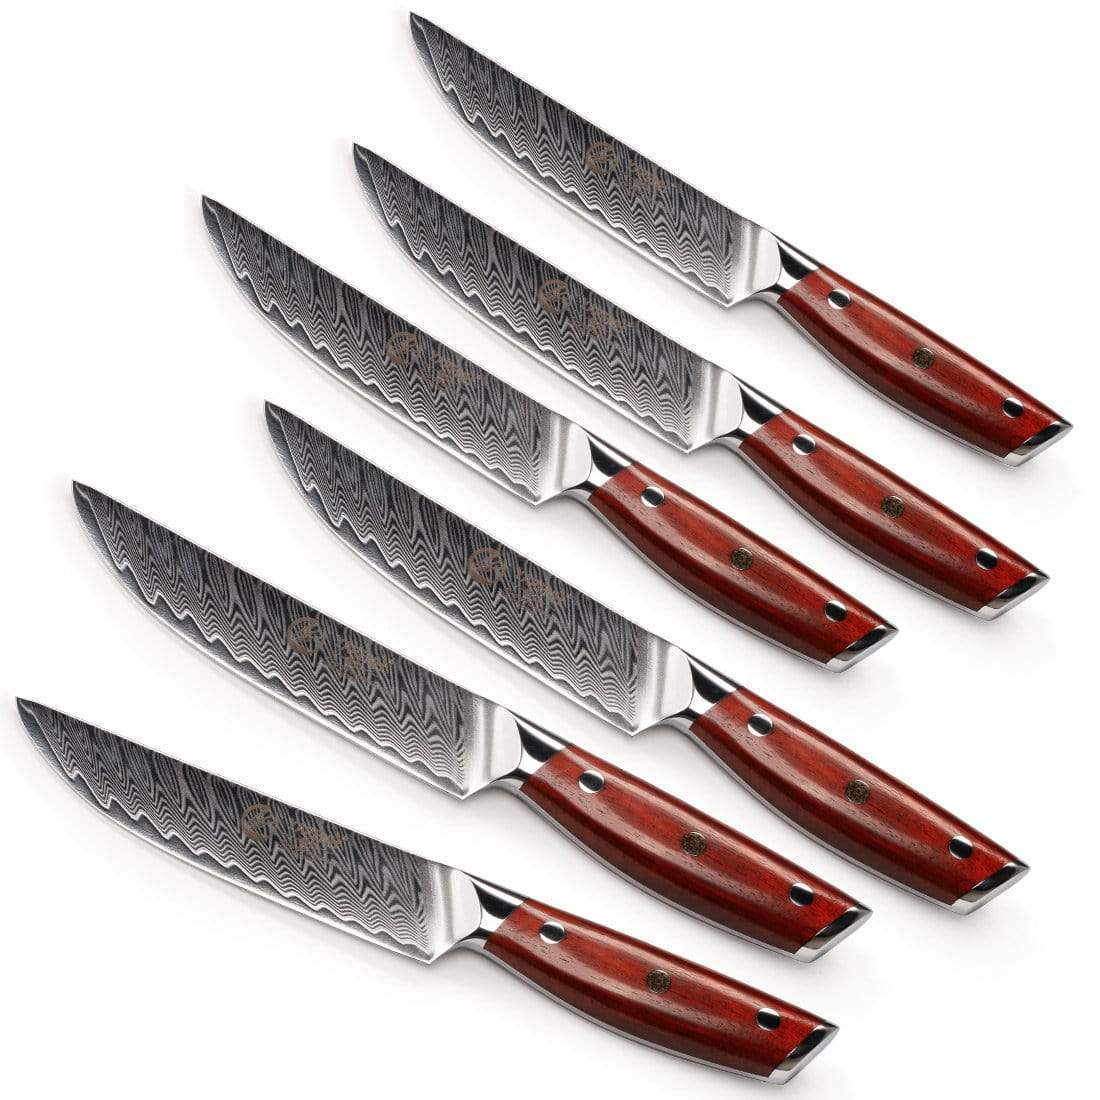 YARENH Steak Knives Set 6 Piece-HXZ Series